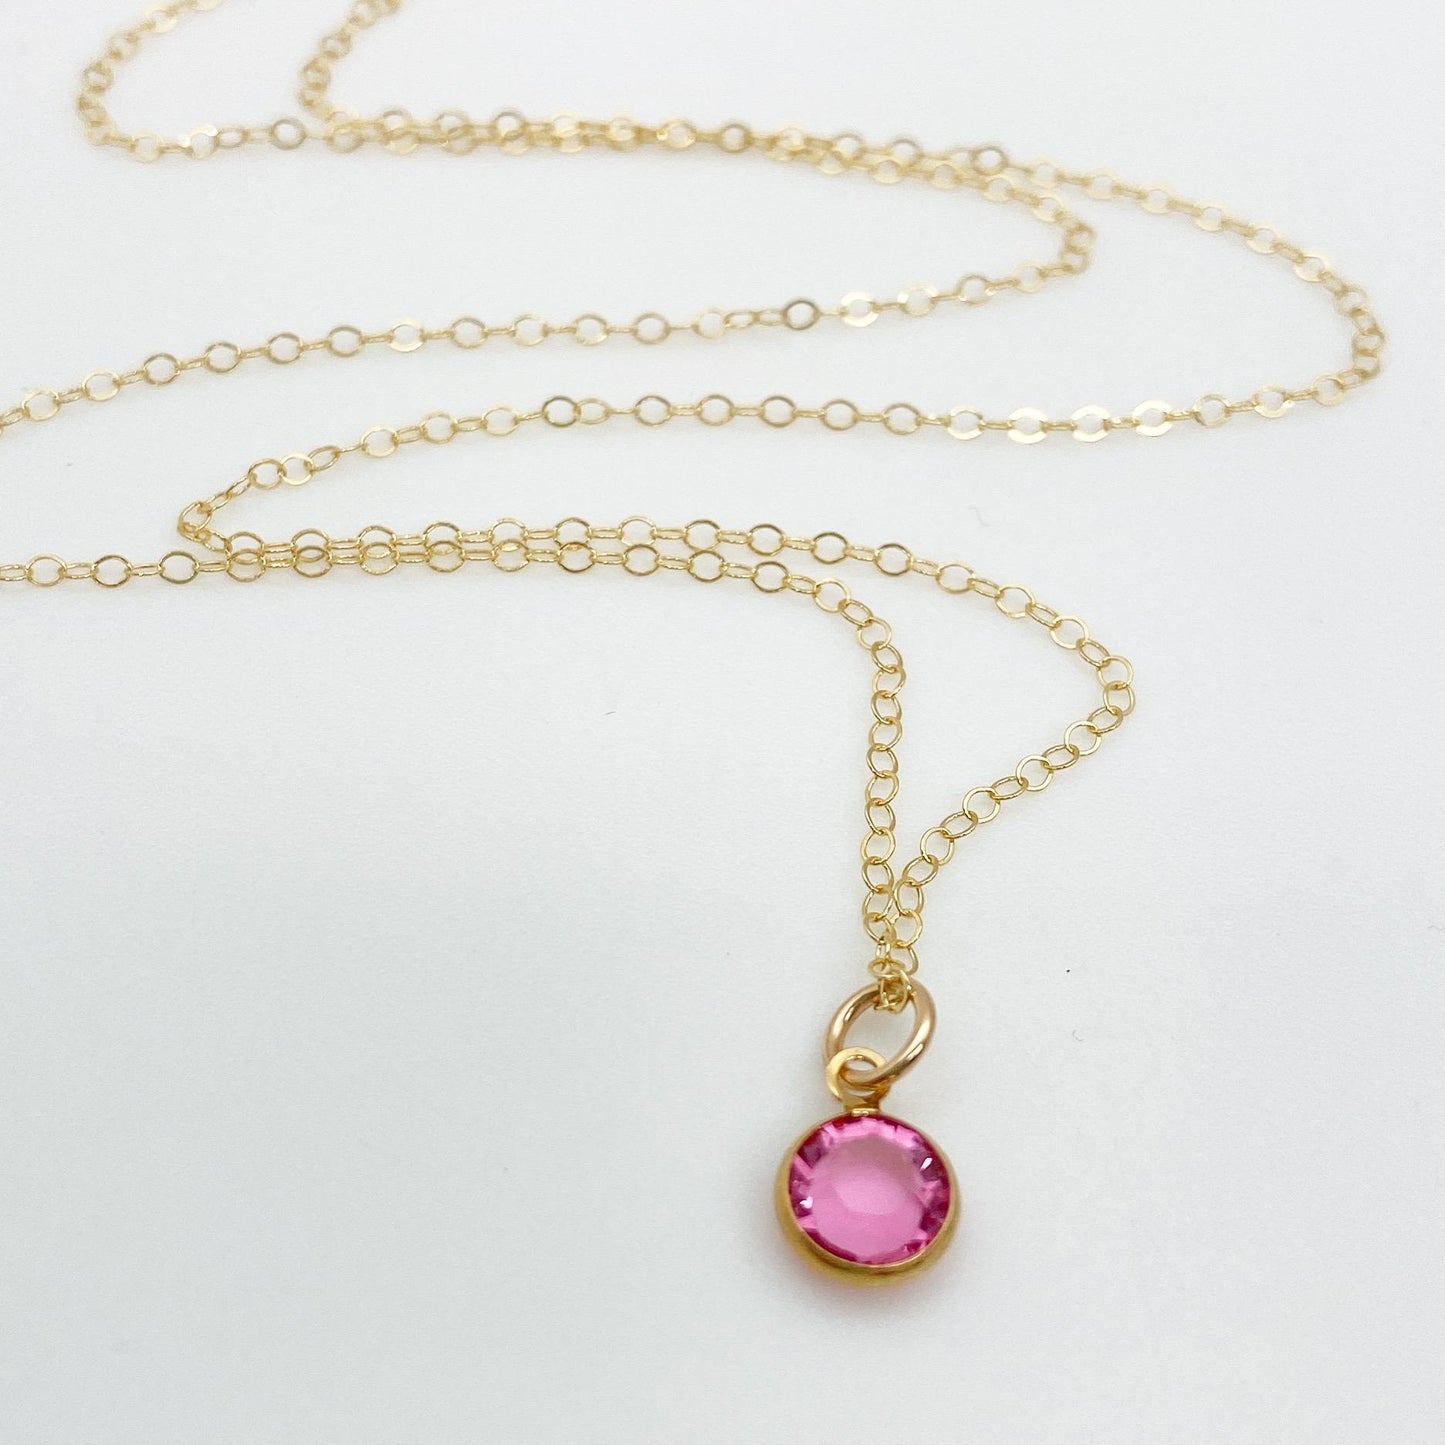 Necklace - Dainty Gem-Tone Crystal Pendant - Pink Tourmaline